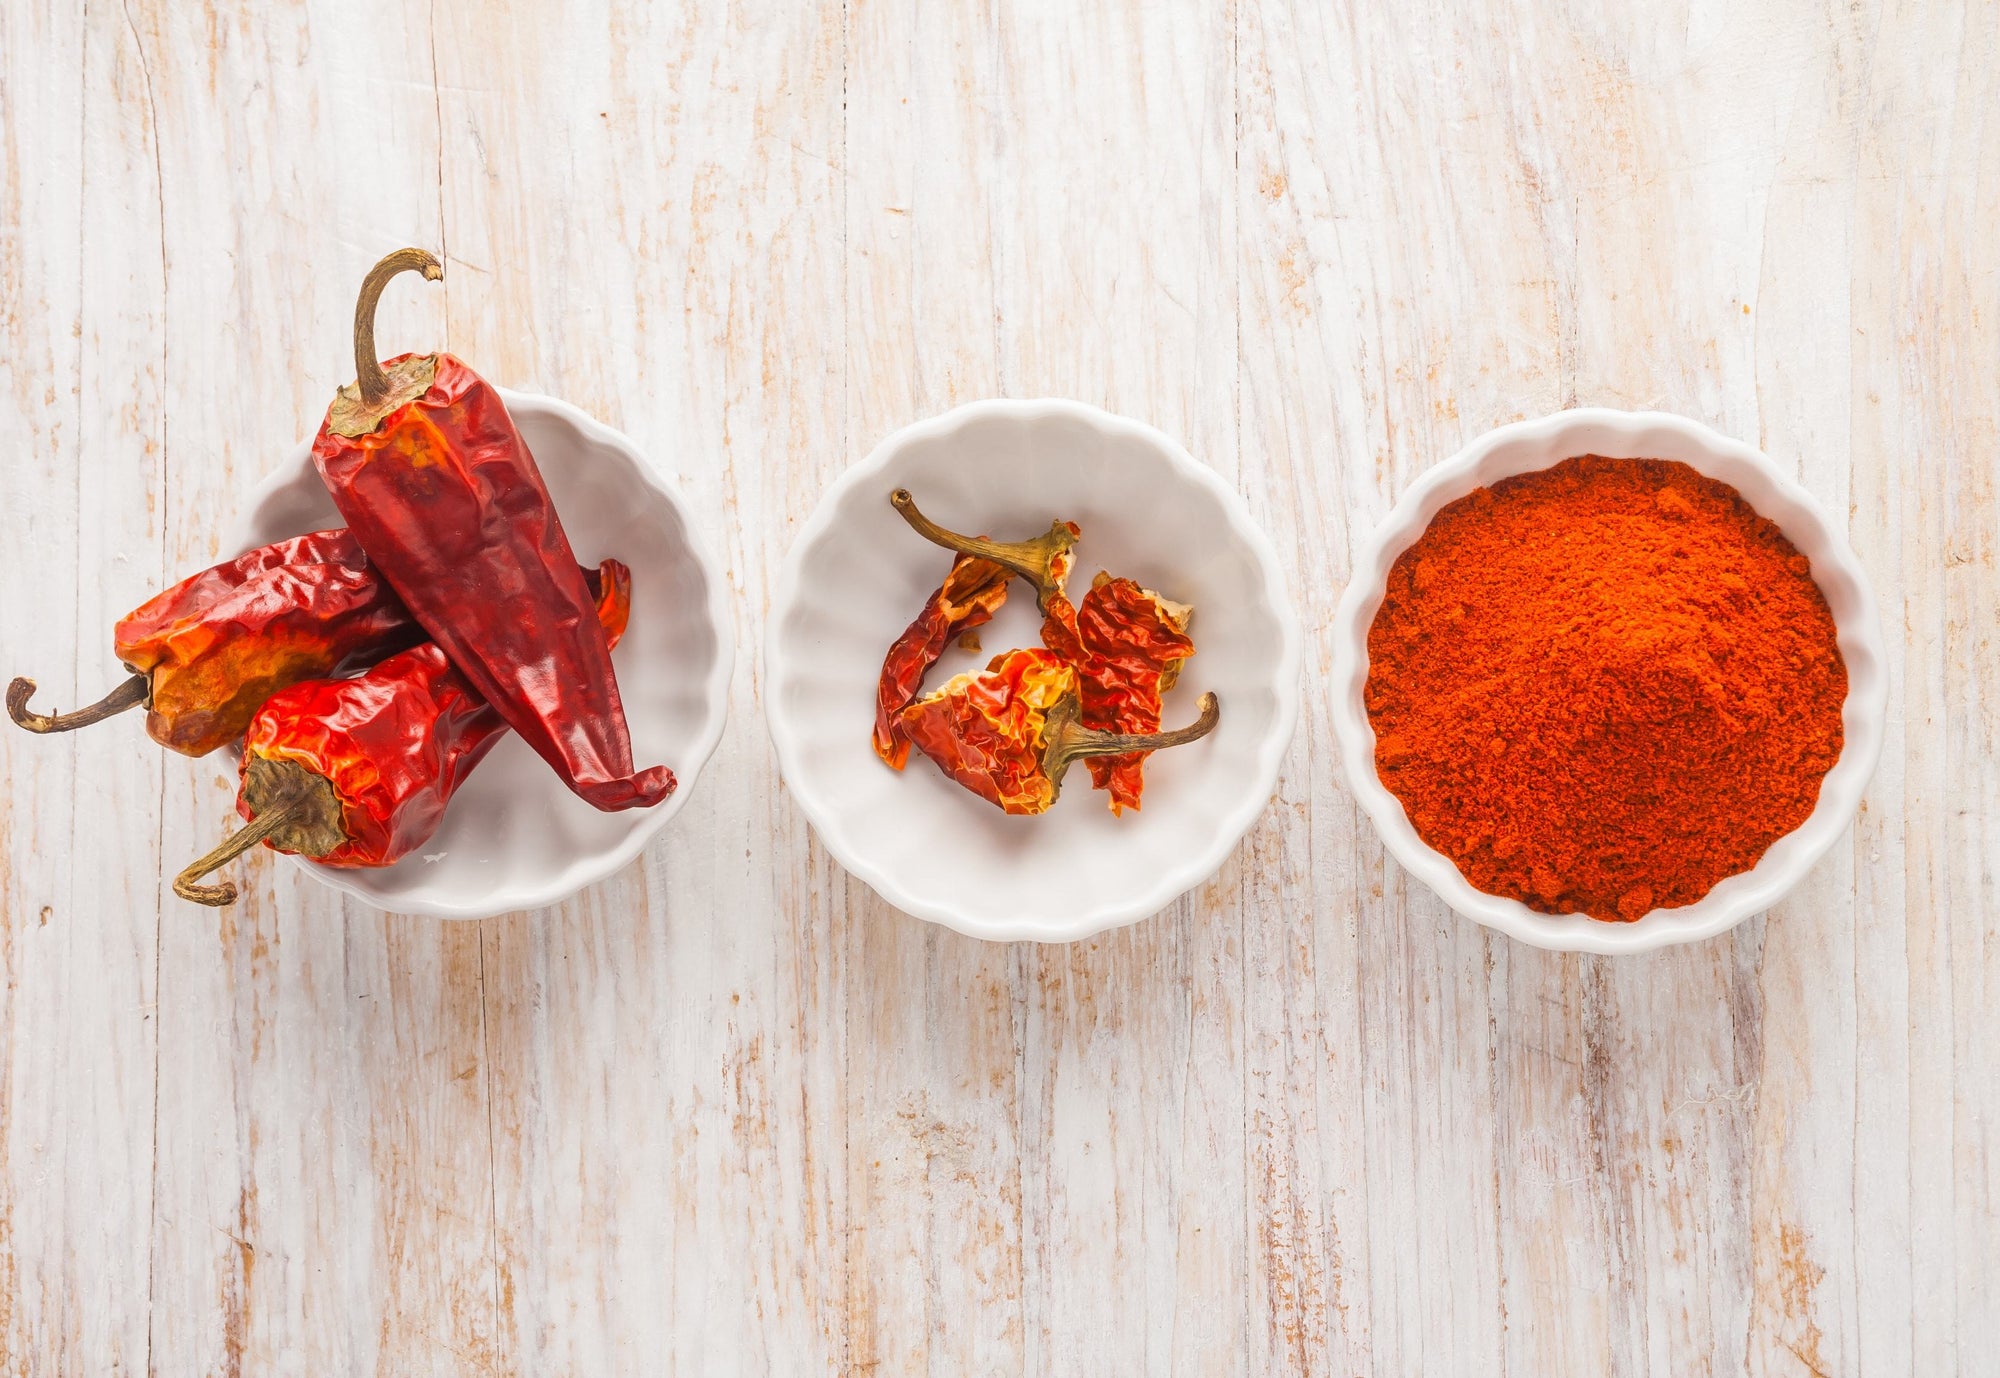 Spicy Foods Lower Disease Risk